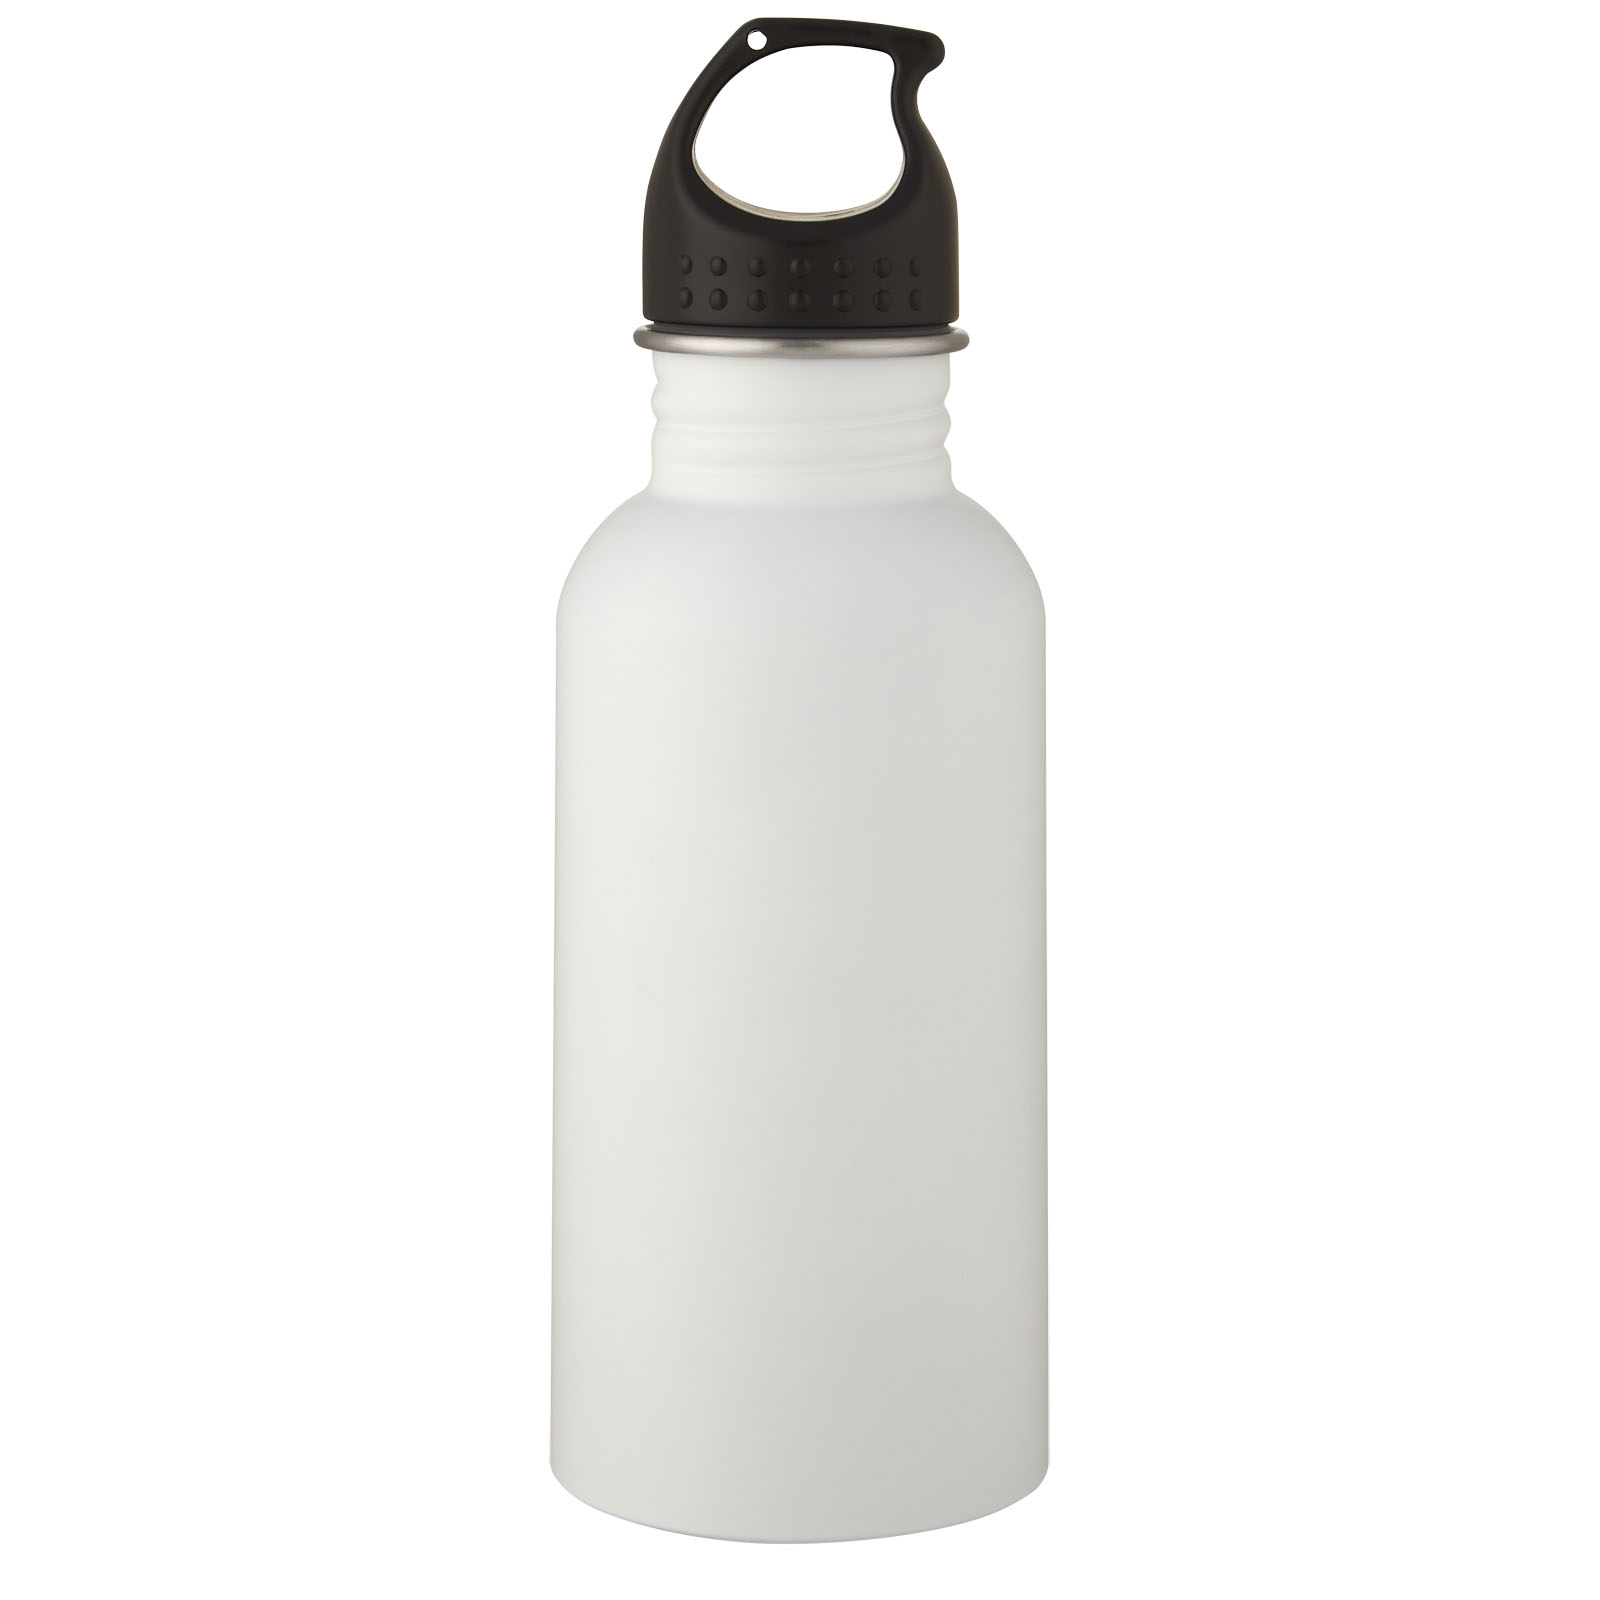 Advertising Water bottles - Luca 500 ml stainless steel water bottle - 1